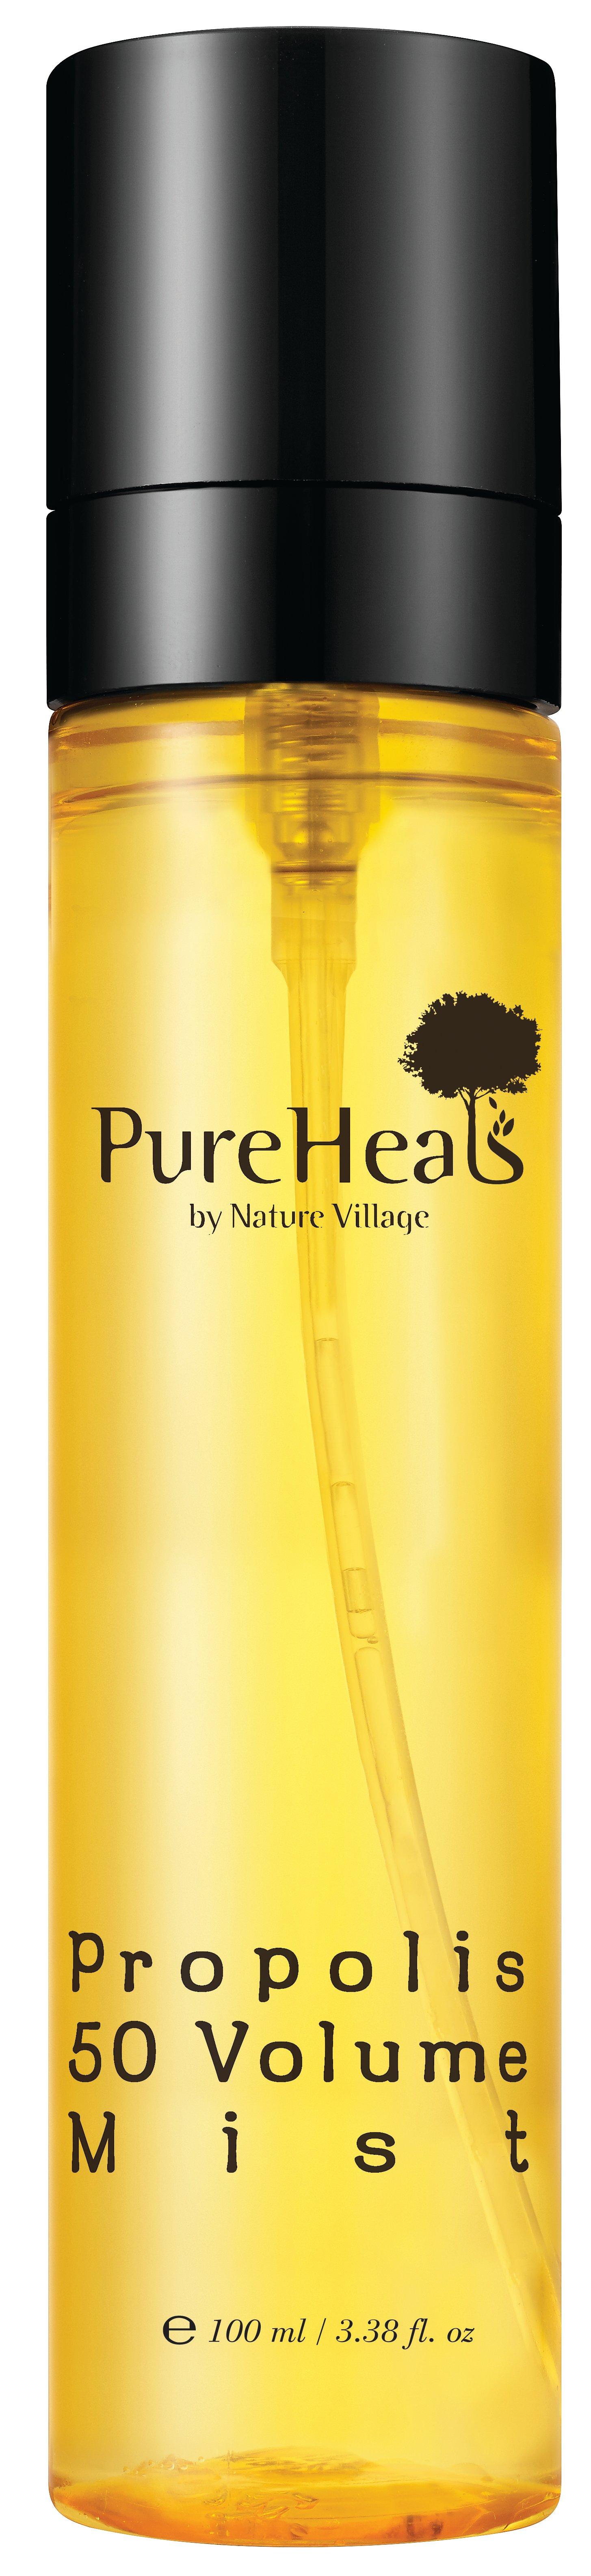 Image of PureHeals Propolis 50 Volume Mist - 100 ml